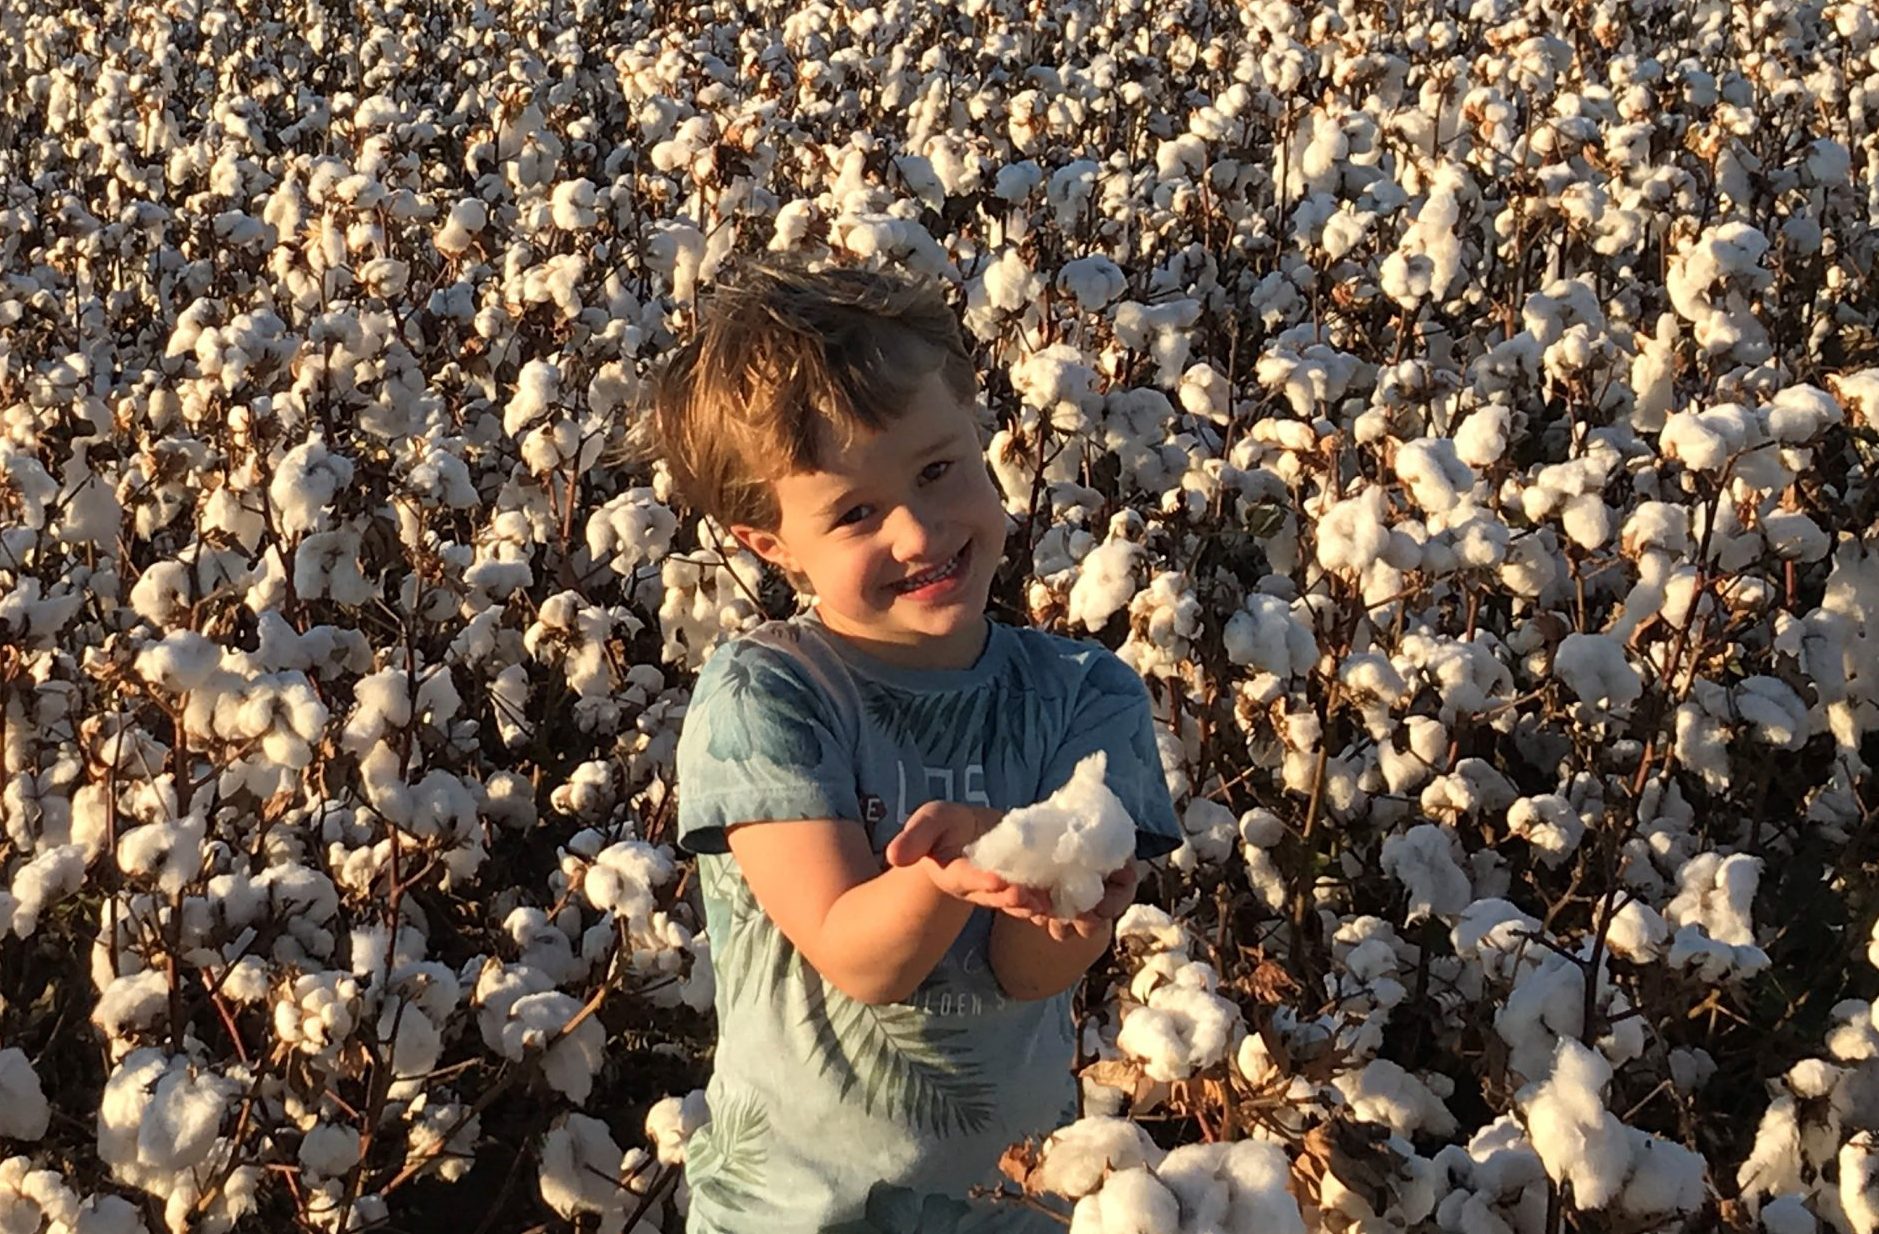 picking cotton on field trip